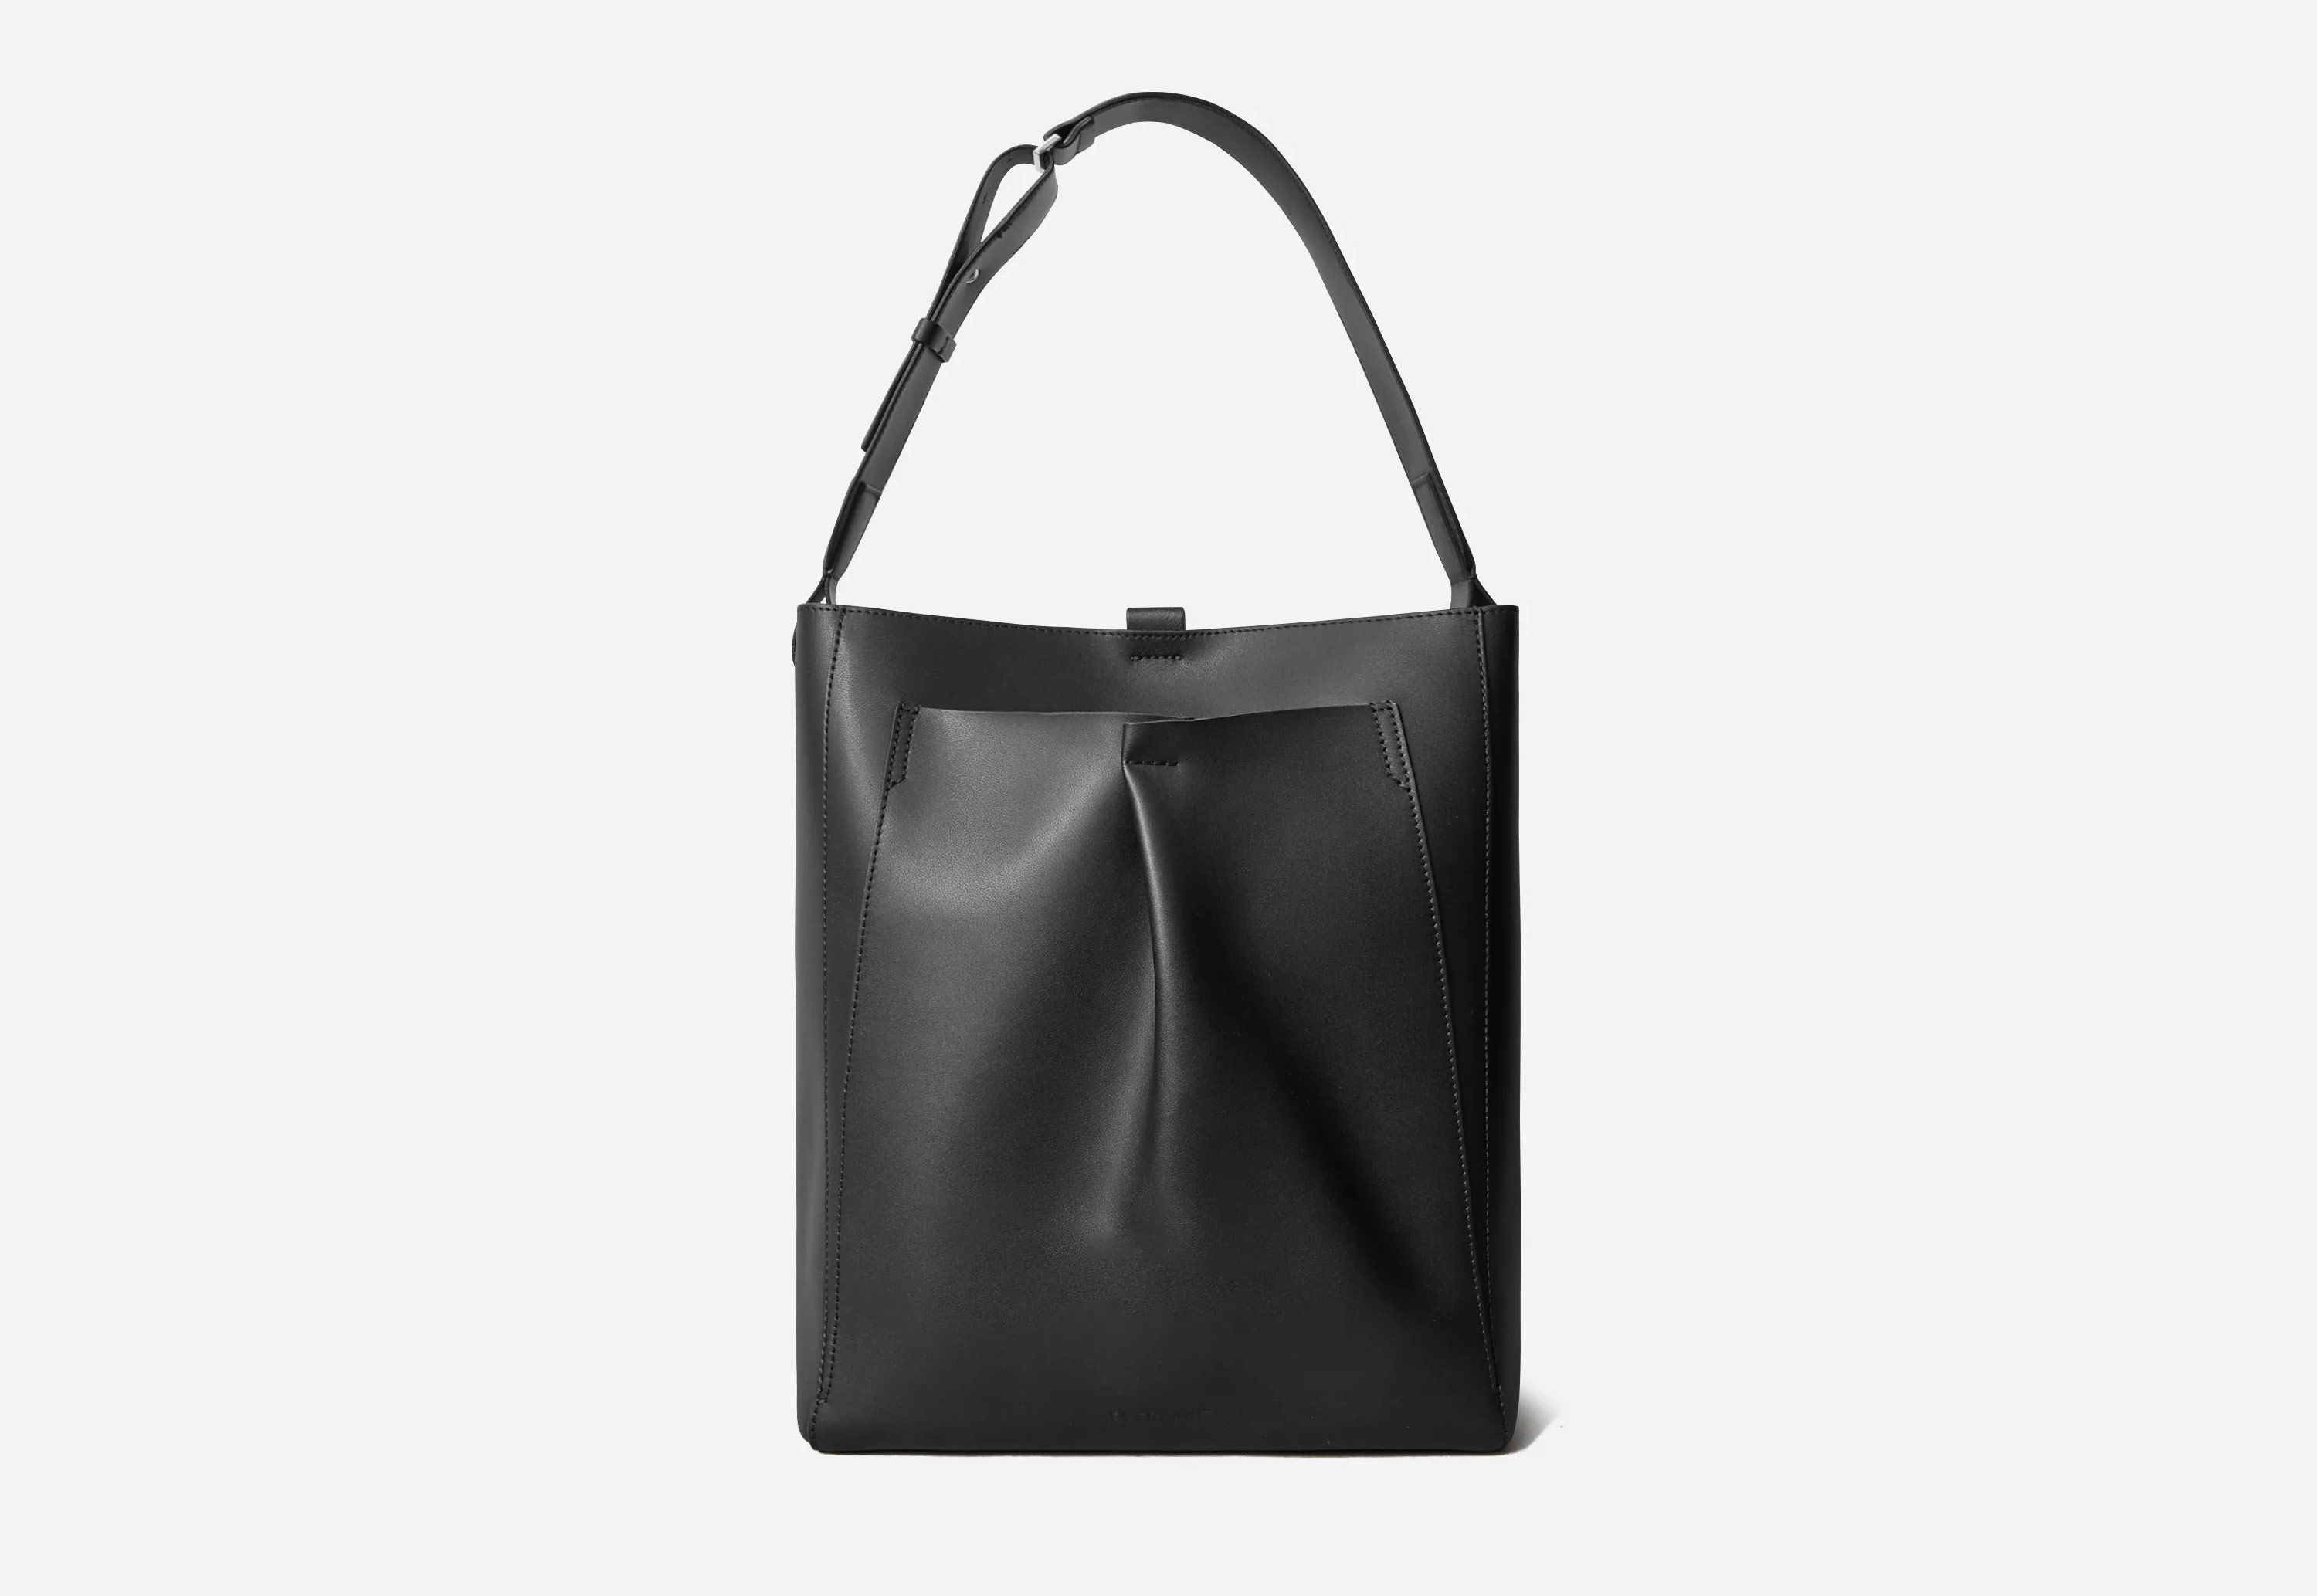 Mn&Sue Handbags for Women Fashion Designer Work Tote Top Handle Messenger Bag Shoulder Bag Satchel Purse